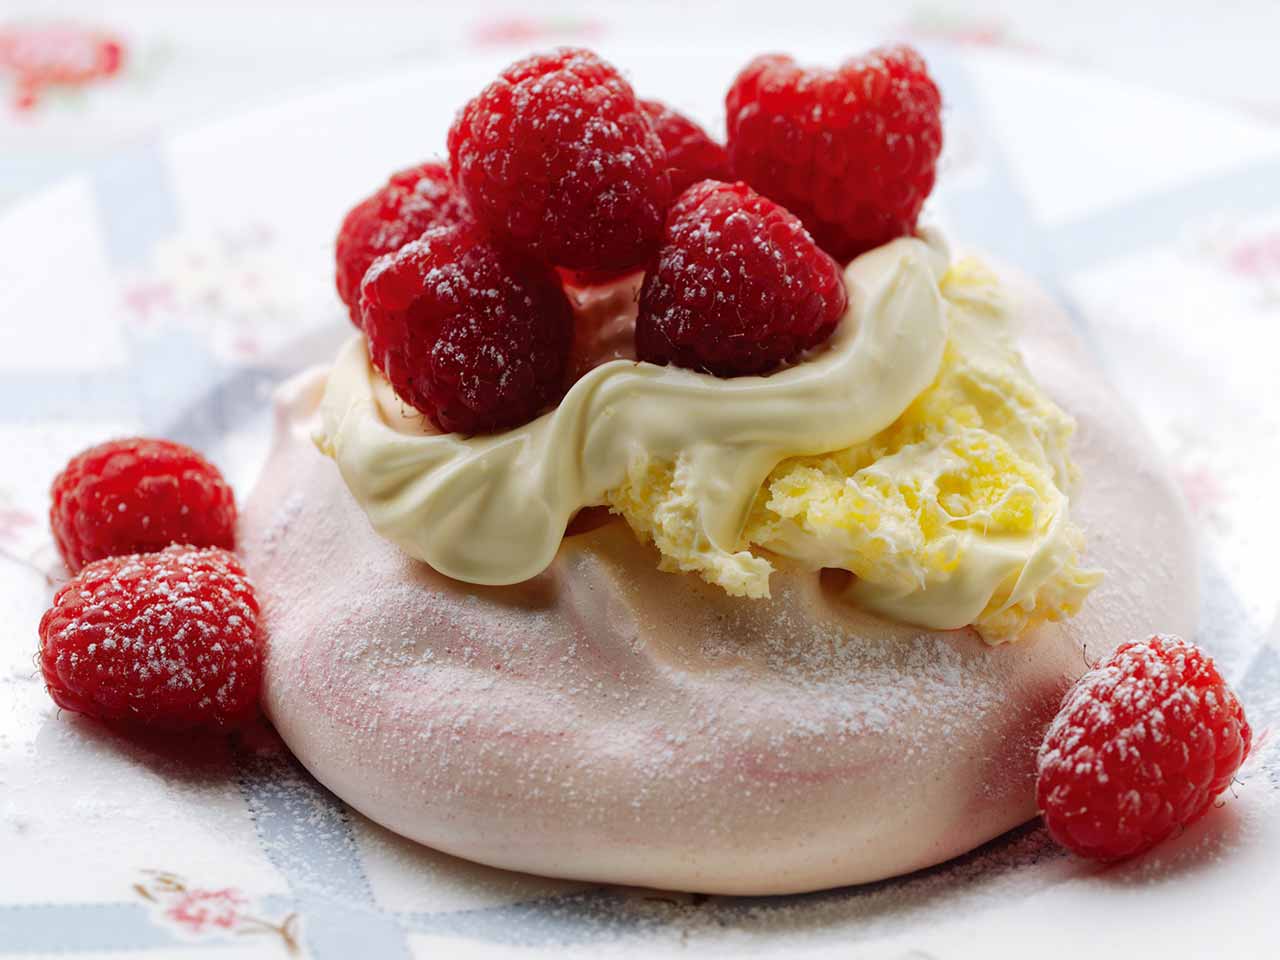 Mini pavlova with clotted cream and raspberries